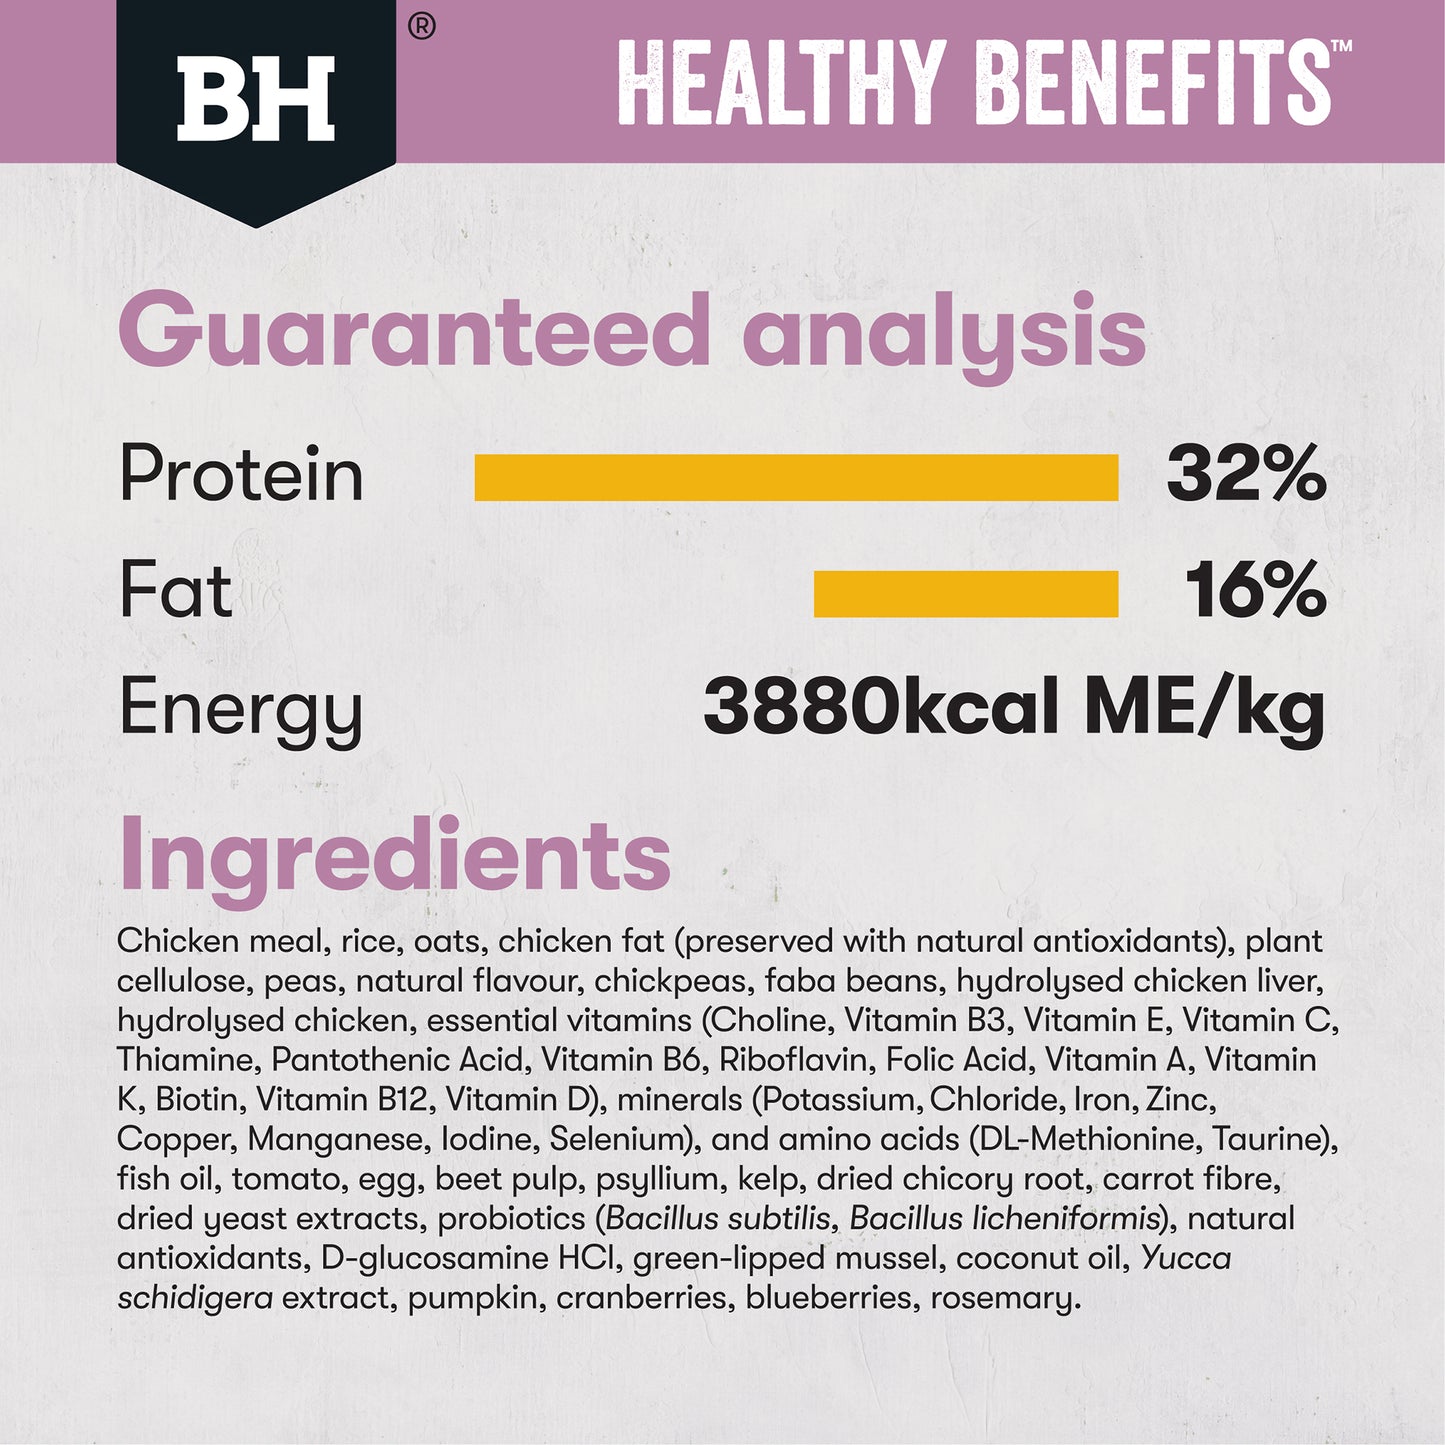 Black Hawk Healthy Benefits Chicken Hairball Adult Dry Cat Food 4KG